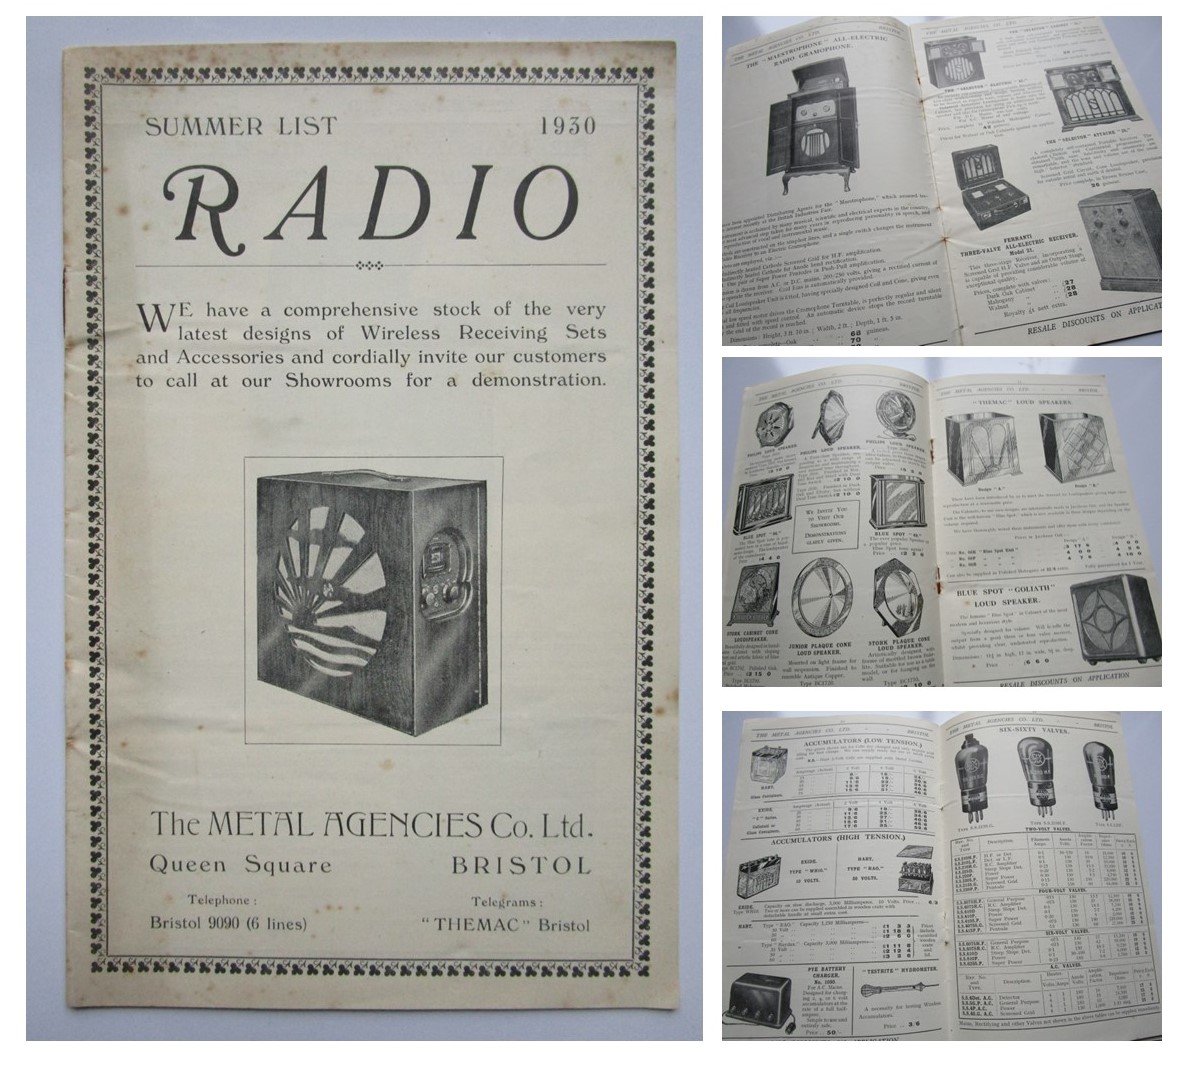 ORIGINAL 1930 RADIO TRADE CATALOGUE, Radios, Wireless Receiving Sets ...